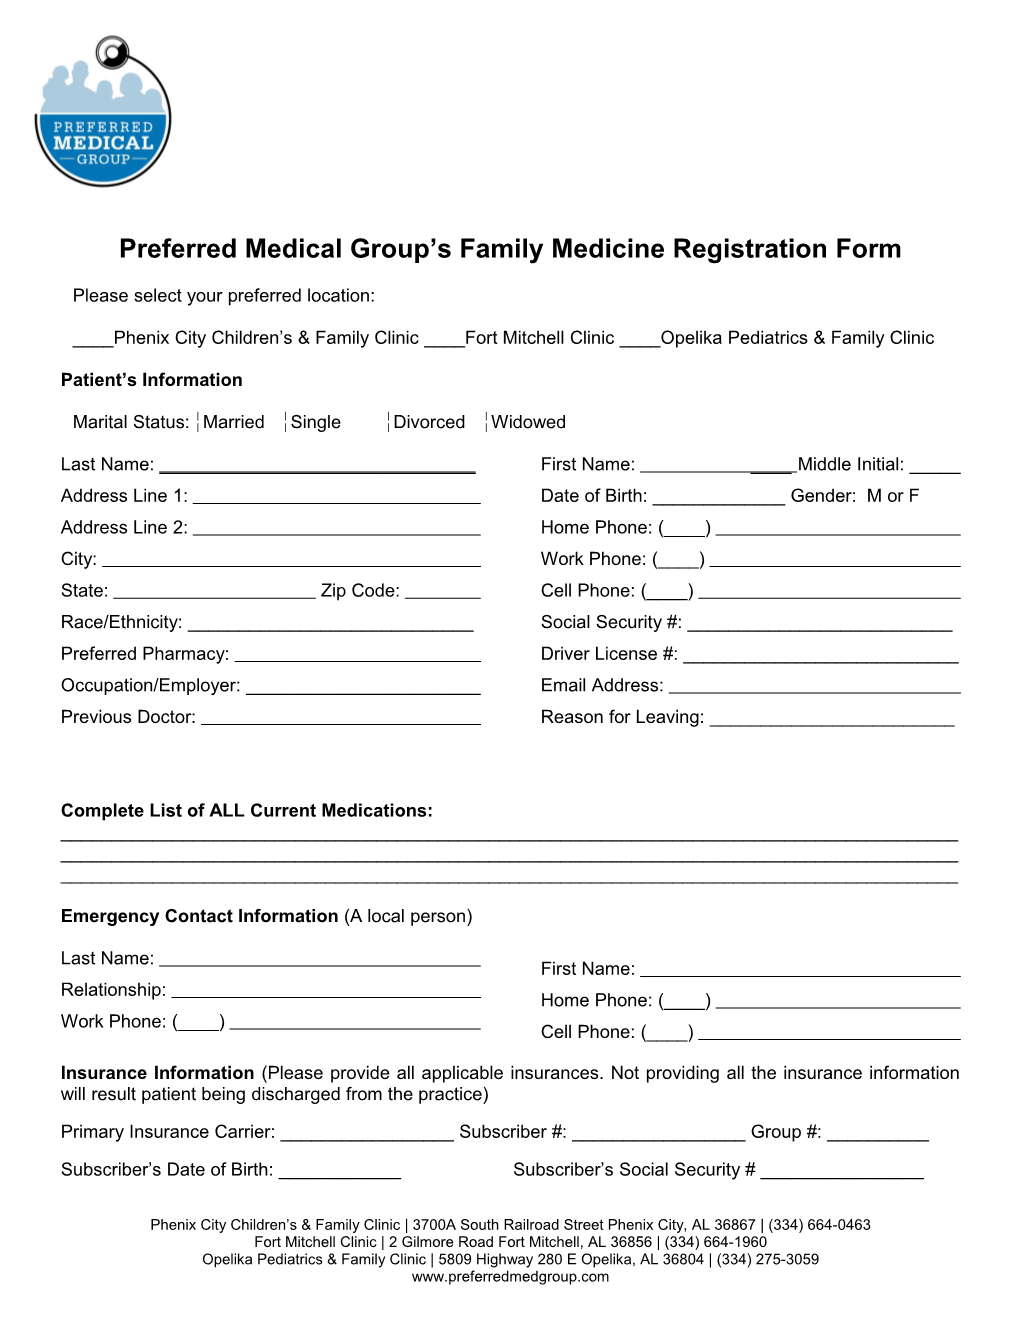 PCC Registration Form